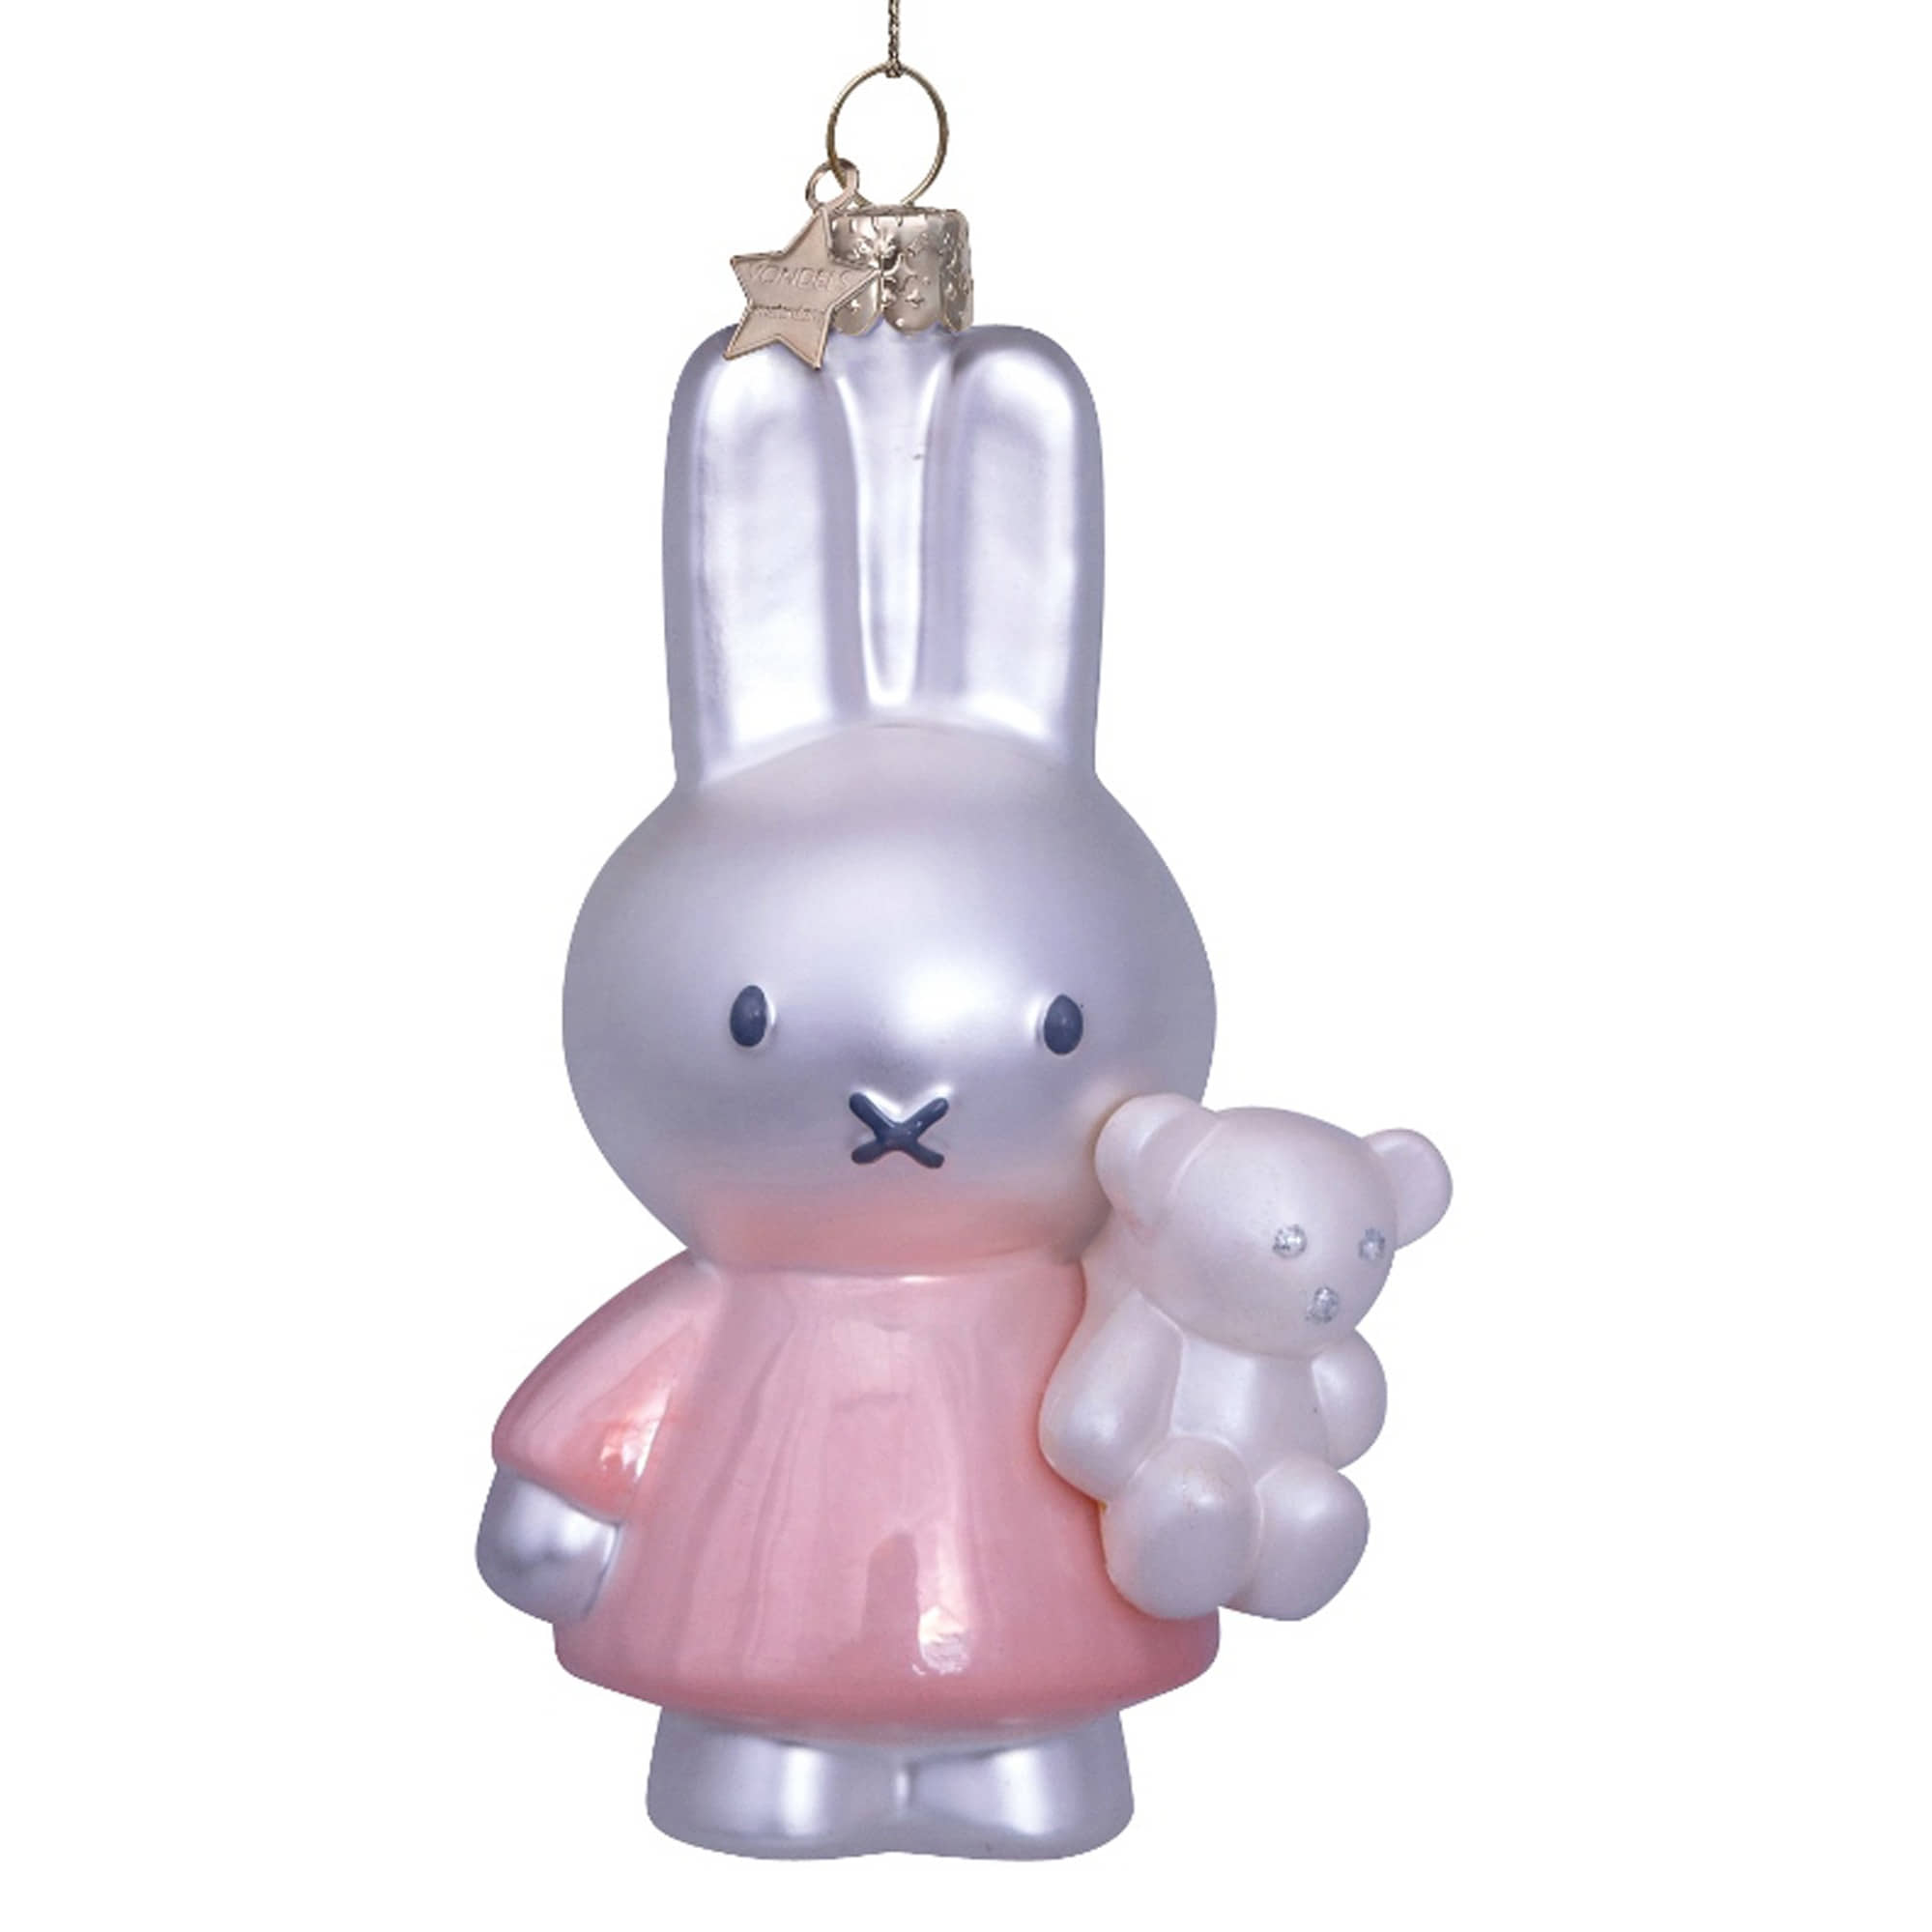 VONDELS Ornament Glass Nijntje/Miffy Baby Pink with Bear